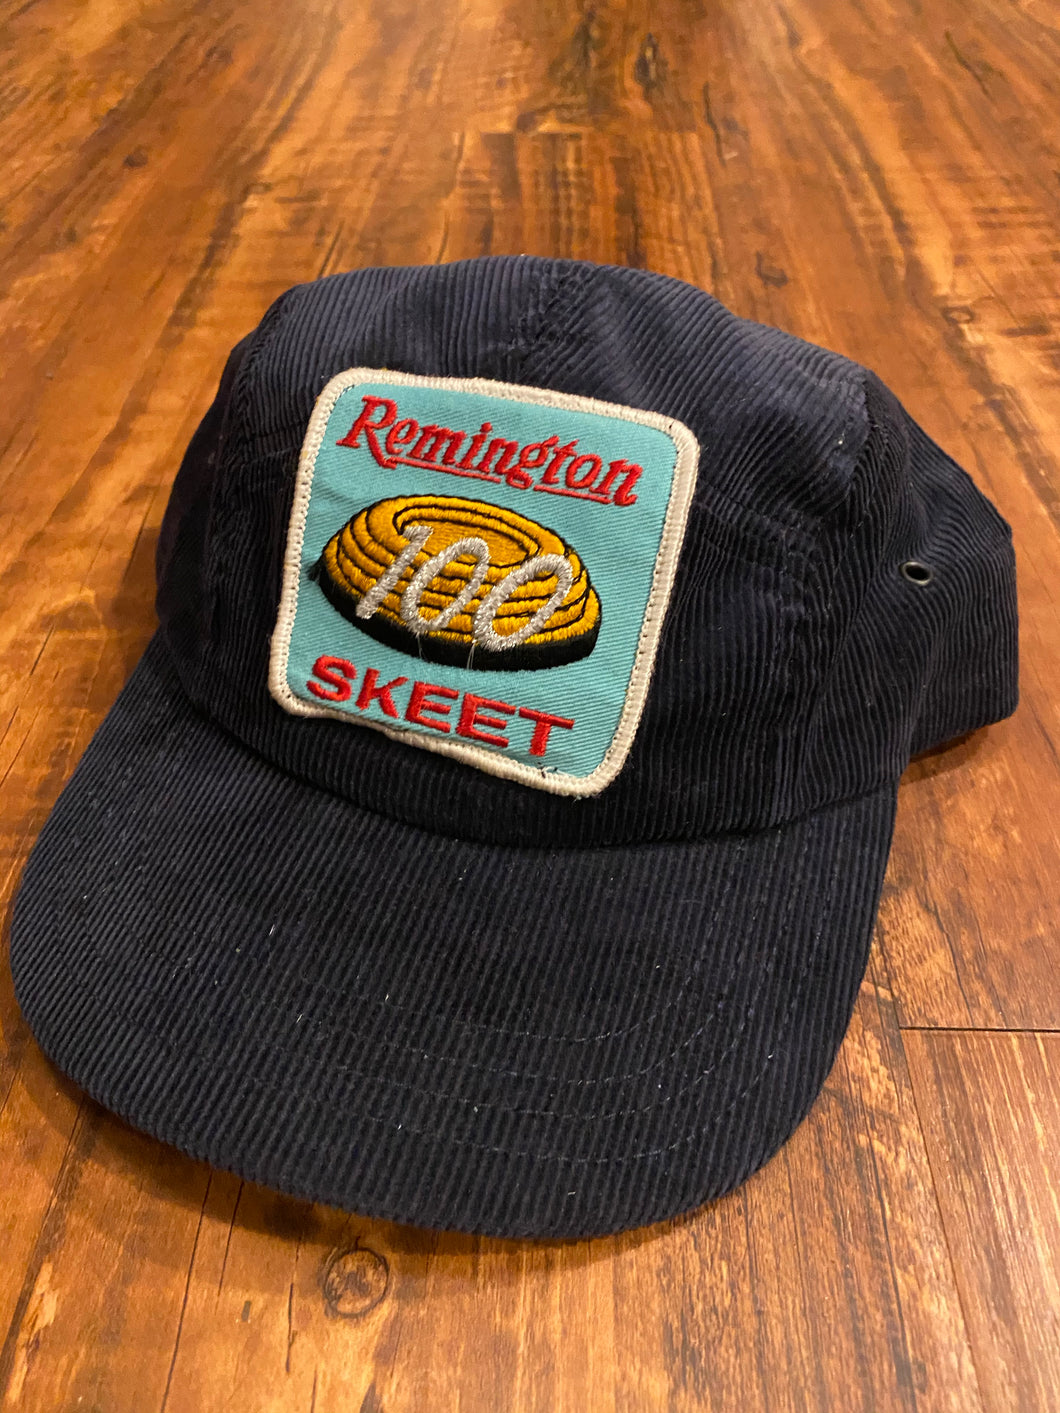 Duxbak Remington 100 Skeet Hat